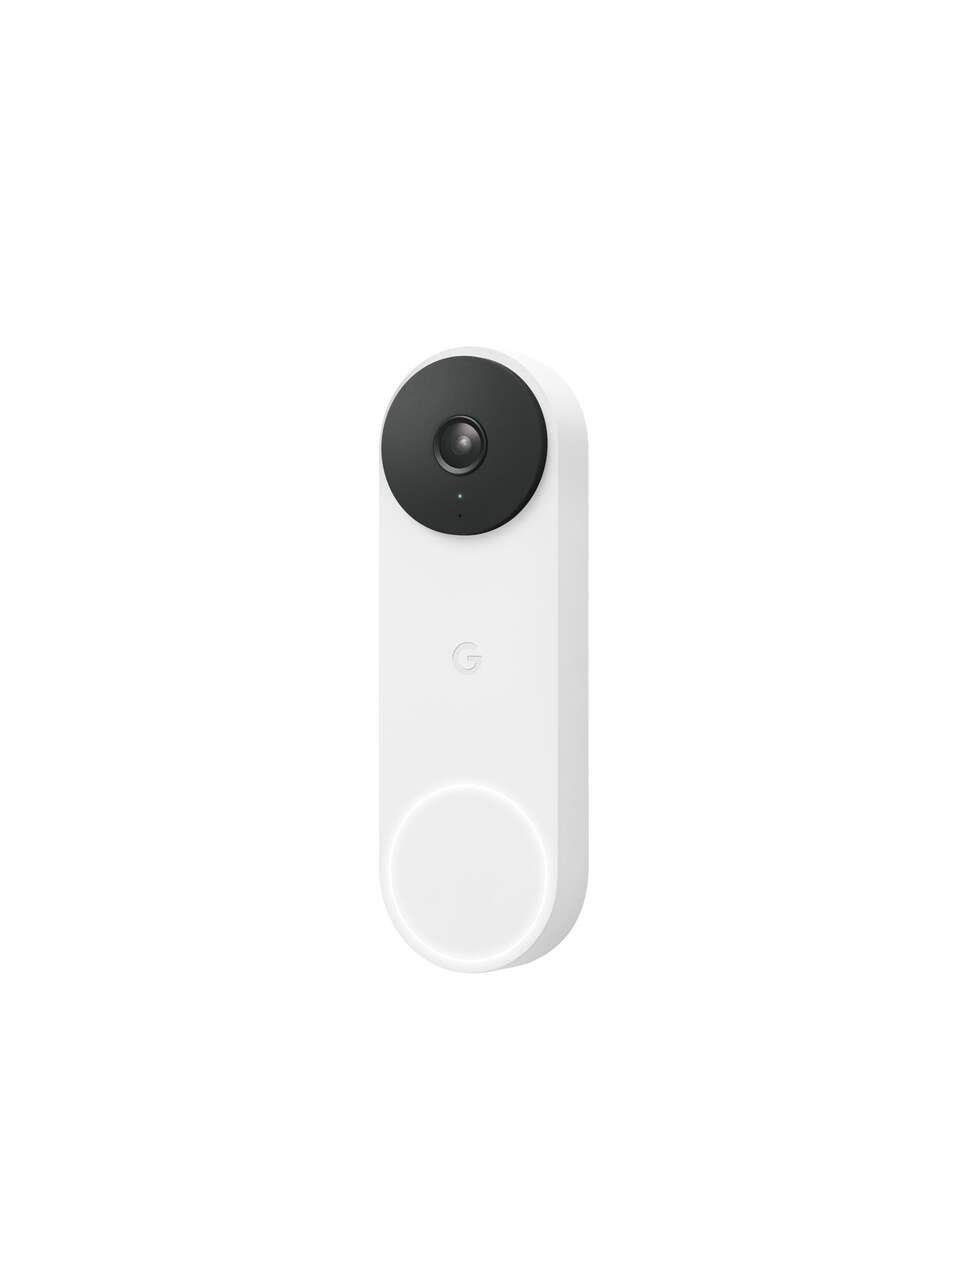 Doorbell Security Cameras For Smart Home Security